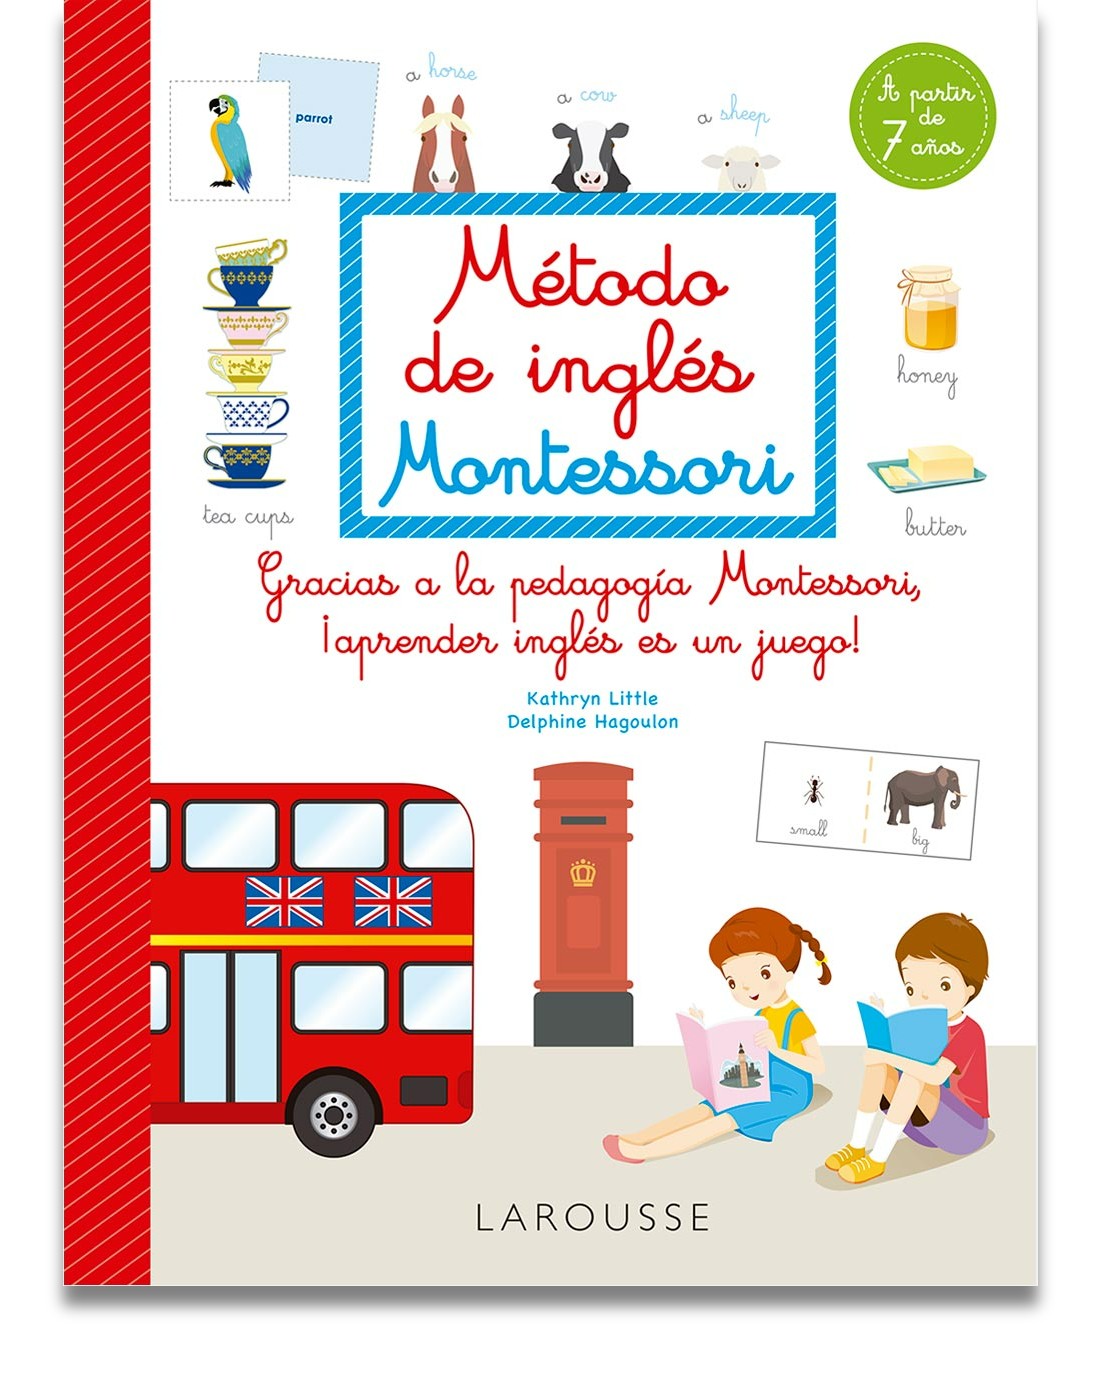 Método de inglés Montessori